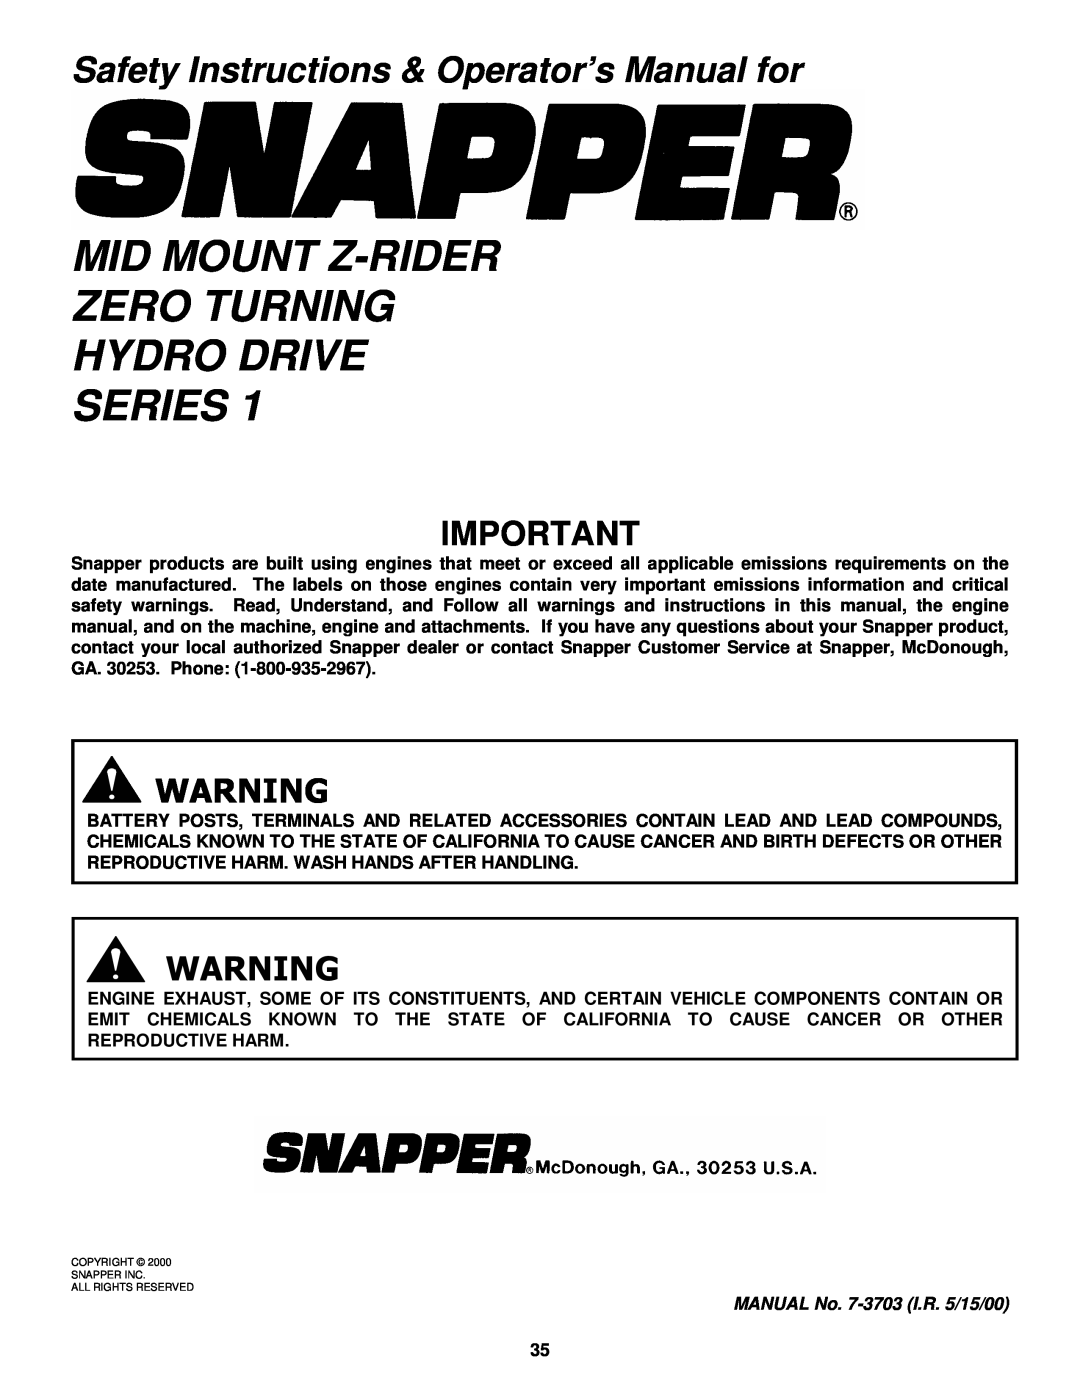 Snapper ZM5201M, ZM5201M, ZM6101M Mid Mount Z-Rider Zero Turning Hydro Drive Series, MANUAL No. 7-3703 I.R. 5/15/00 